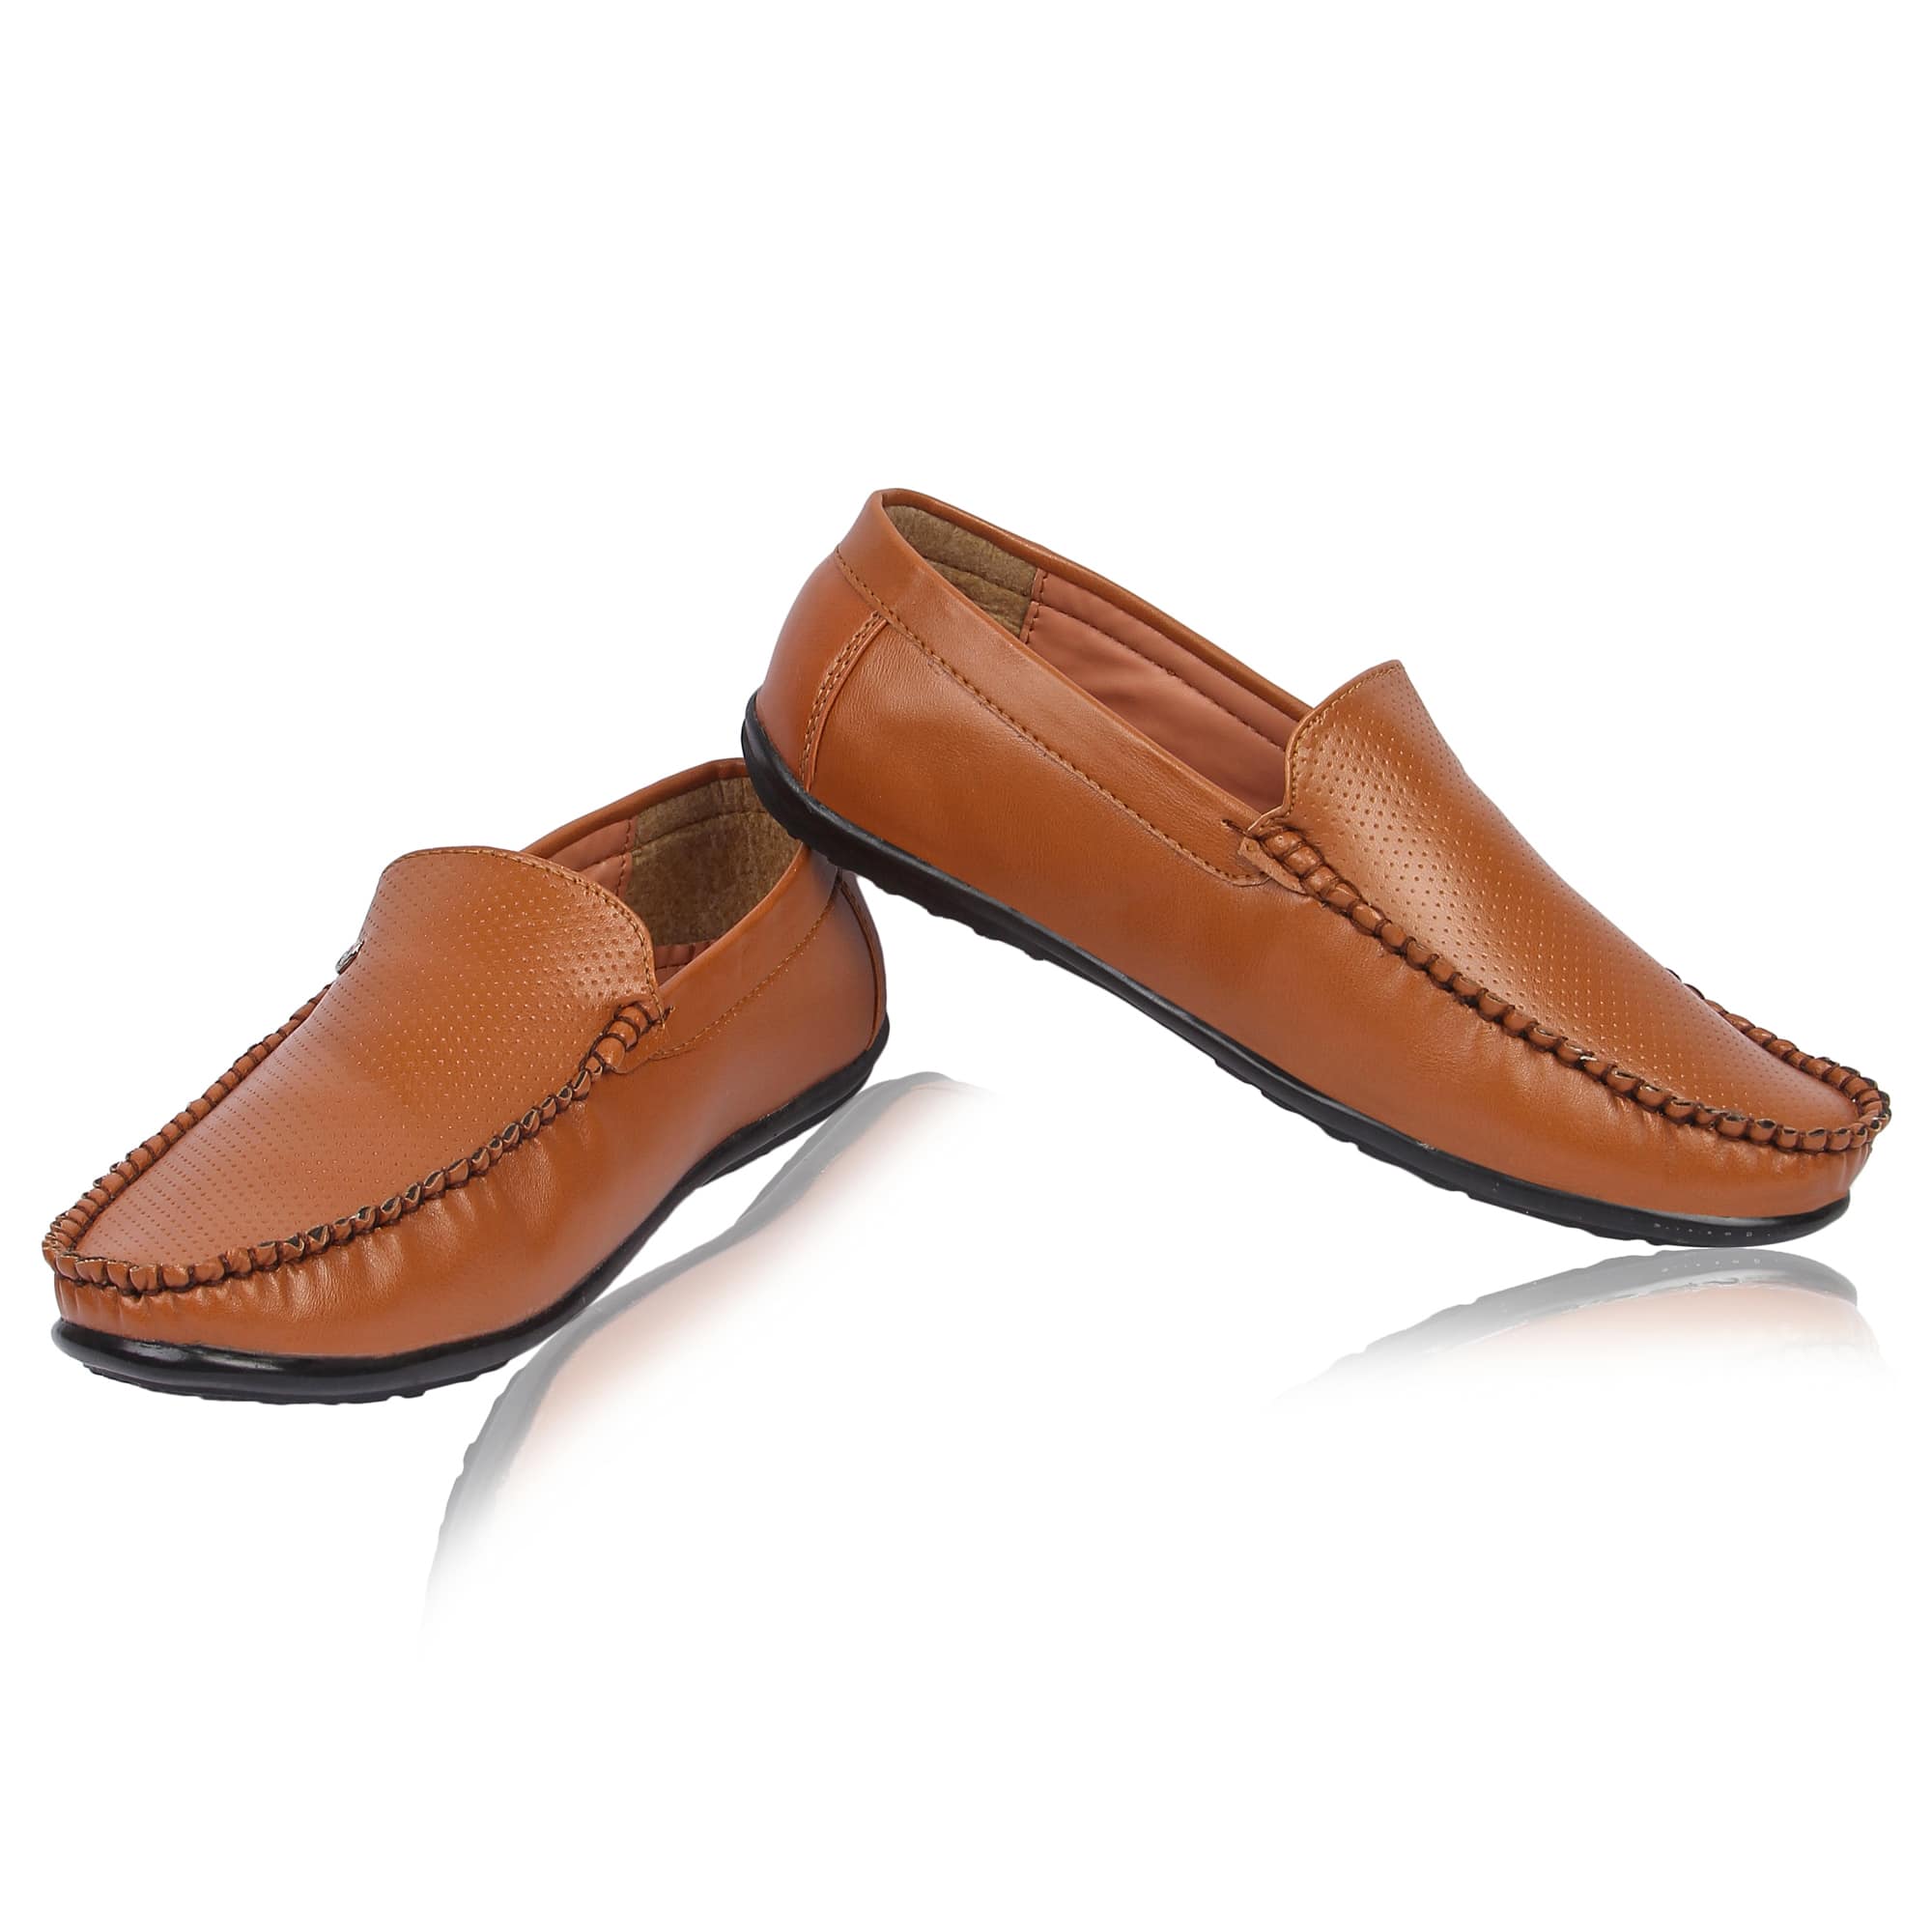 IMG_0194-min | Online Store for Men Footwear in India